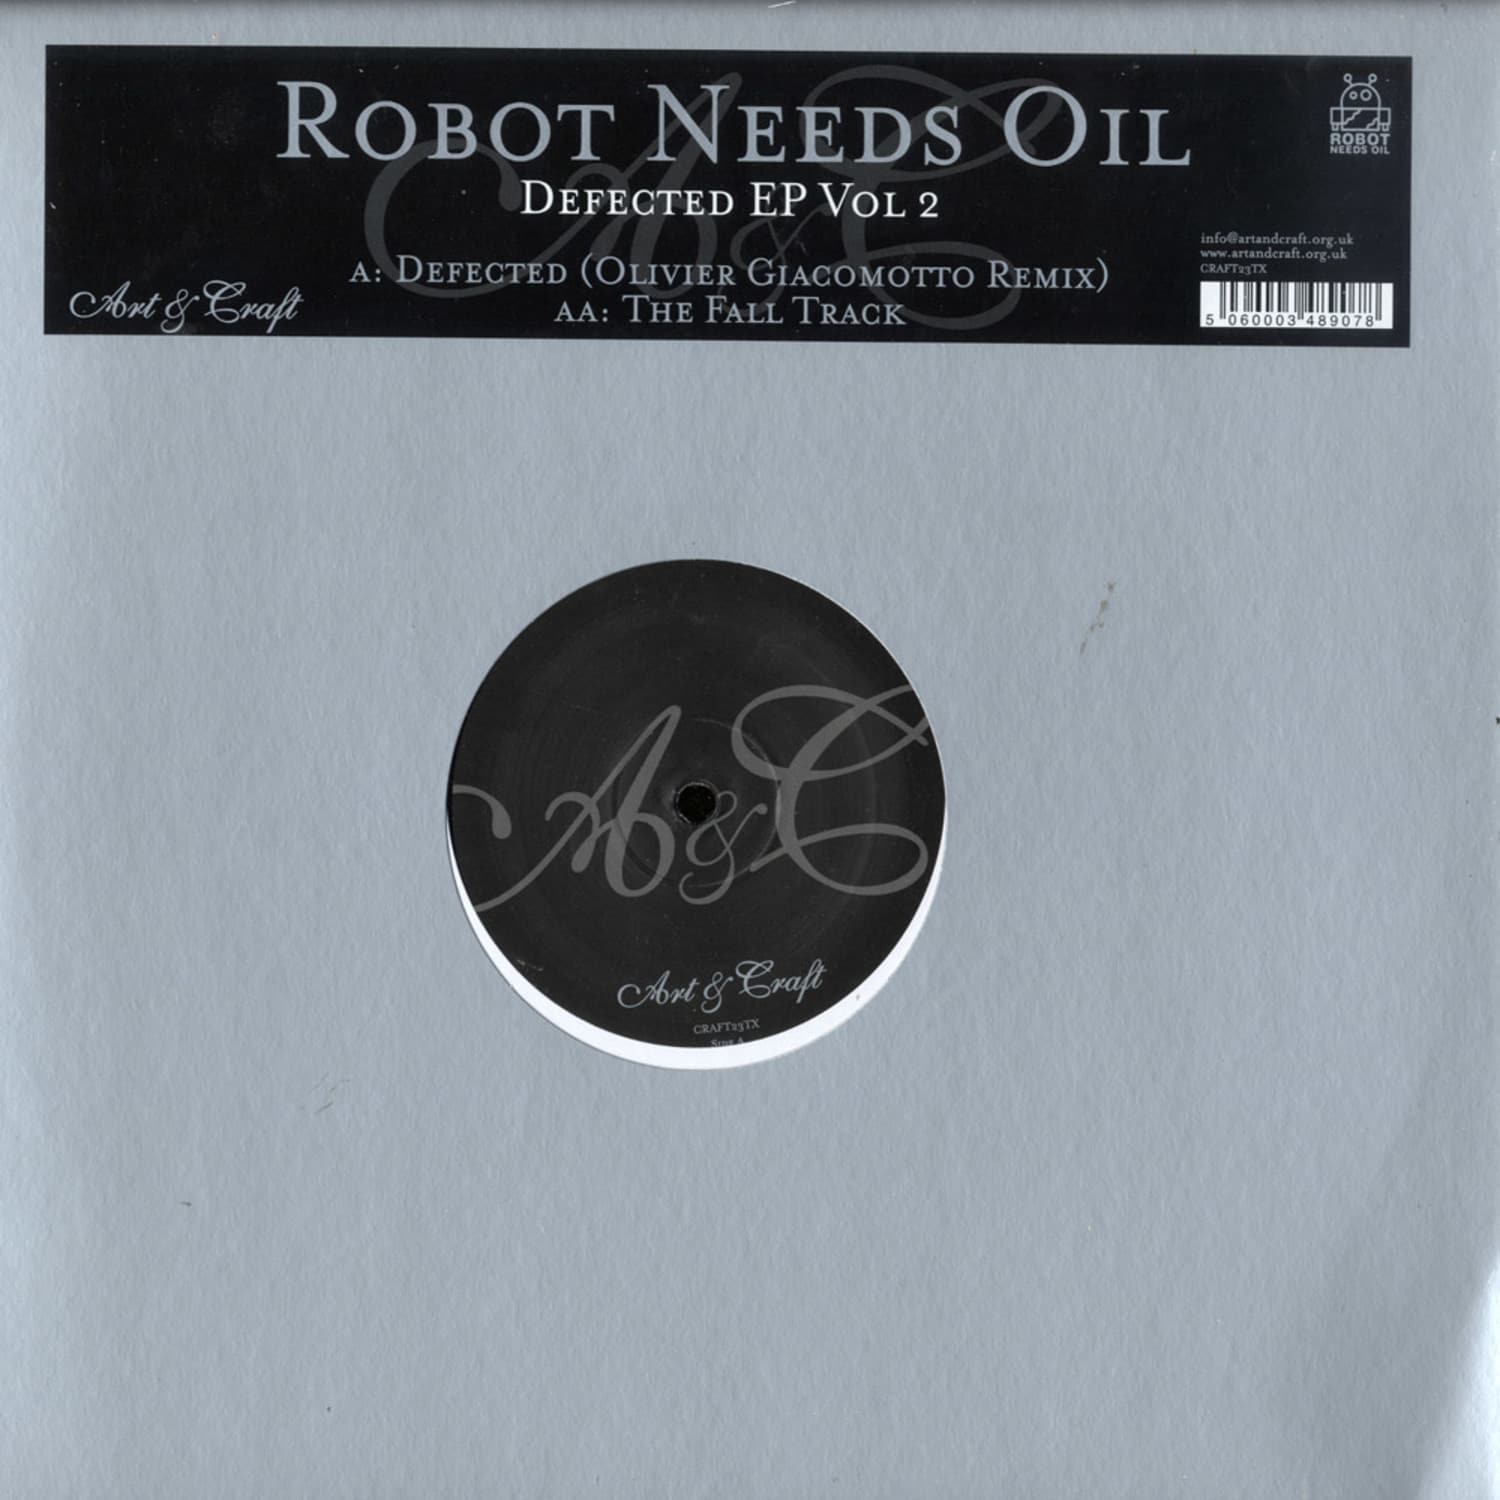 Robot Needs Oil - THE DEFECTED EP VOL. 2